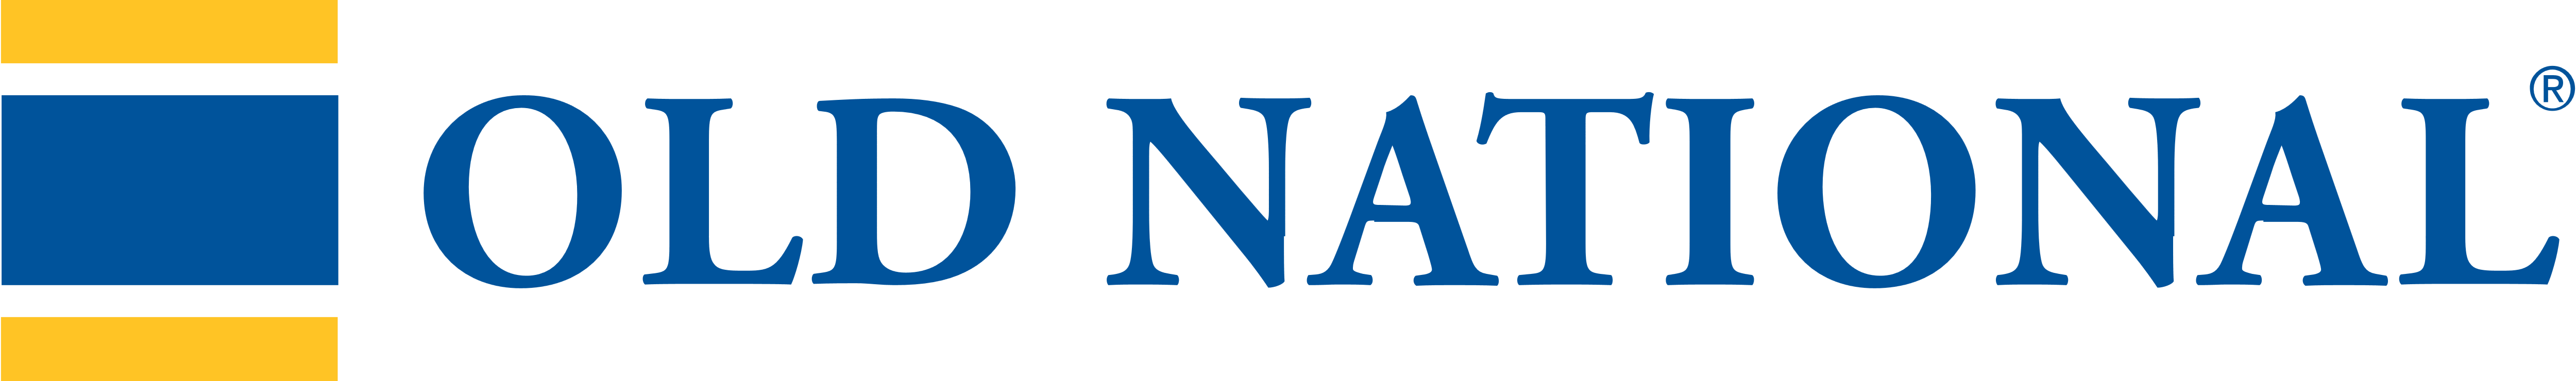 Old National Bank Brand Logo